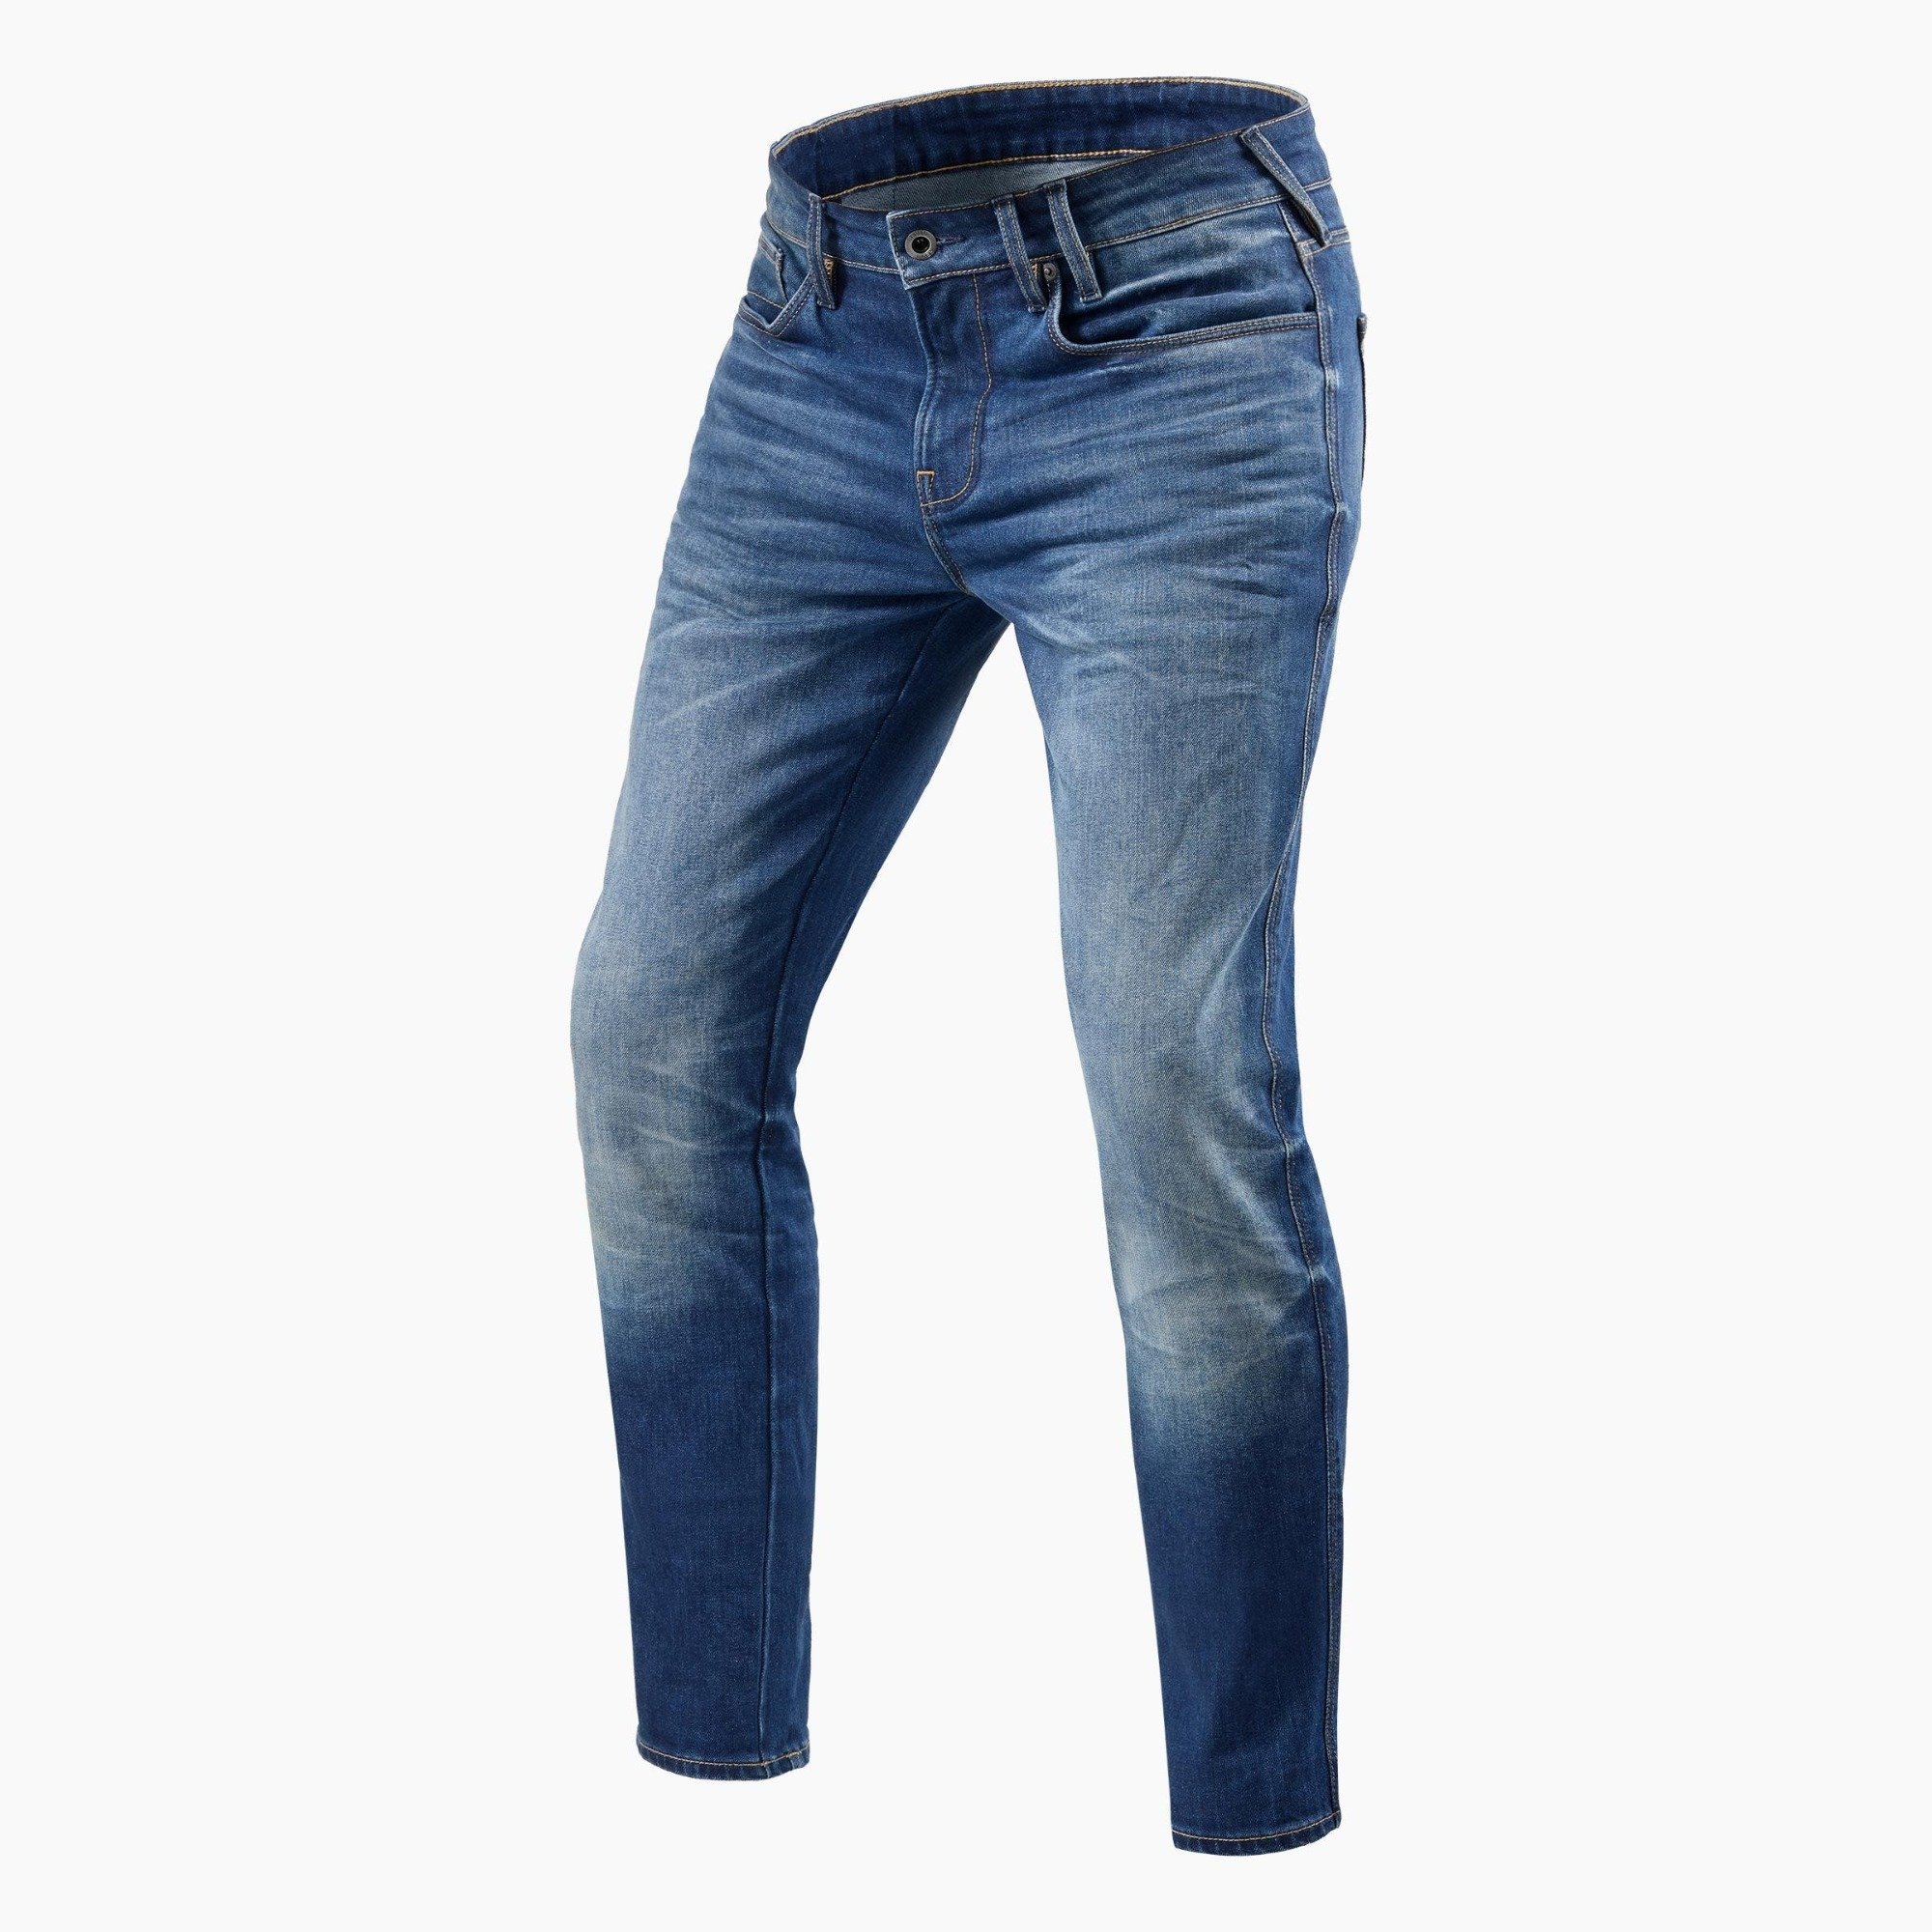 Image of REV'IT! Jeans Carlin SK Mid Blue Used Motorcycle Jeans Size L36/W30 EN